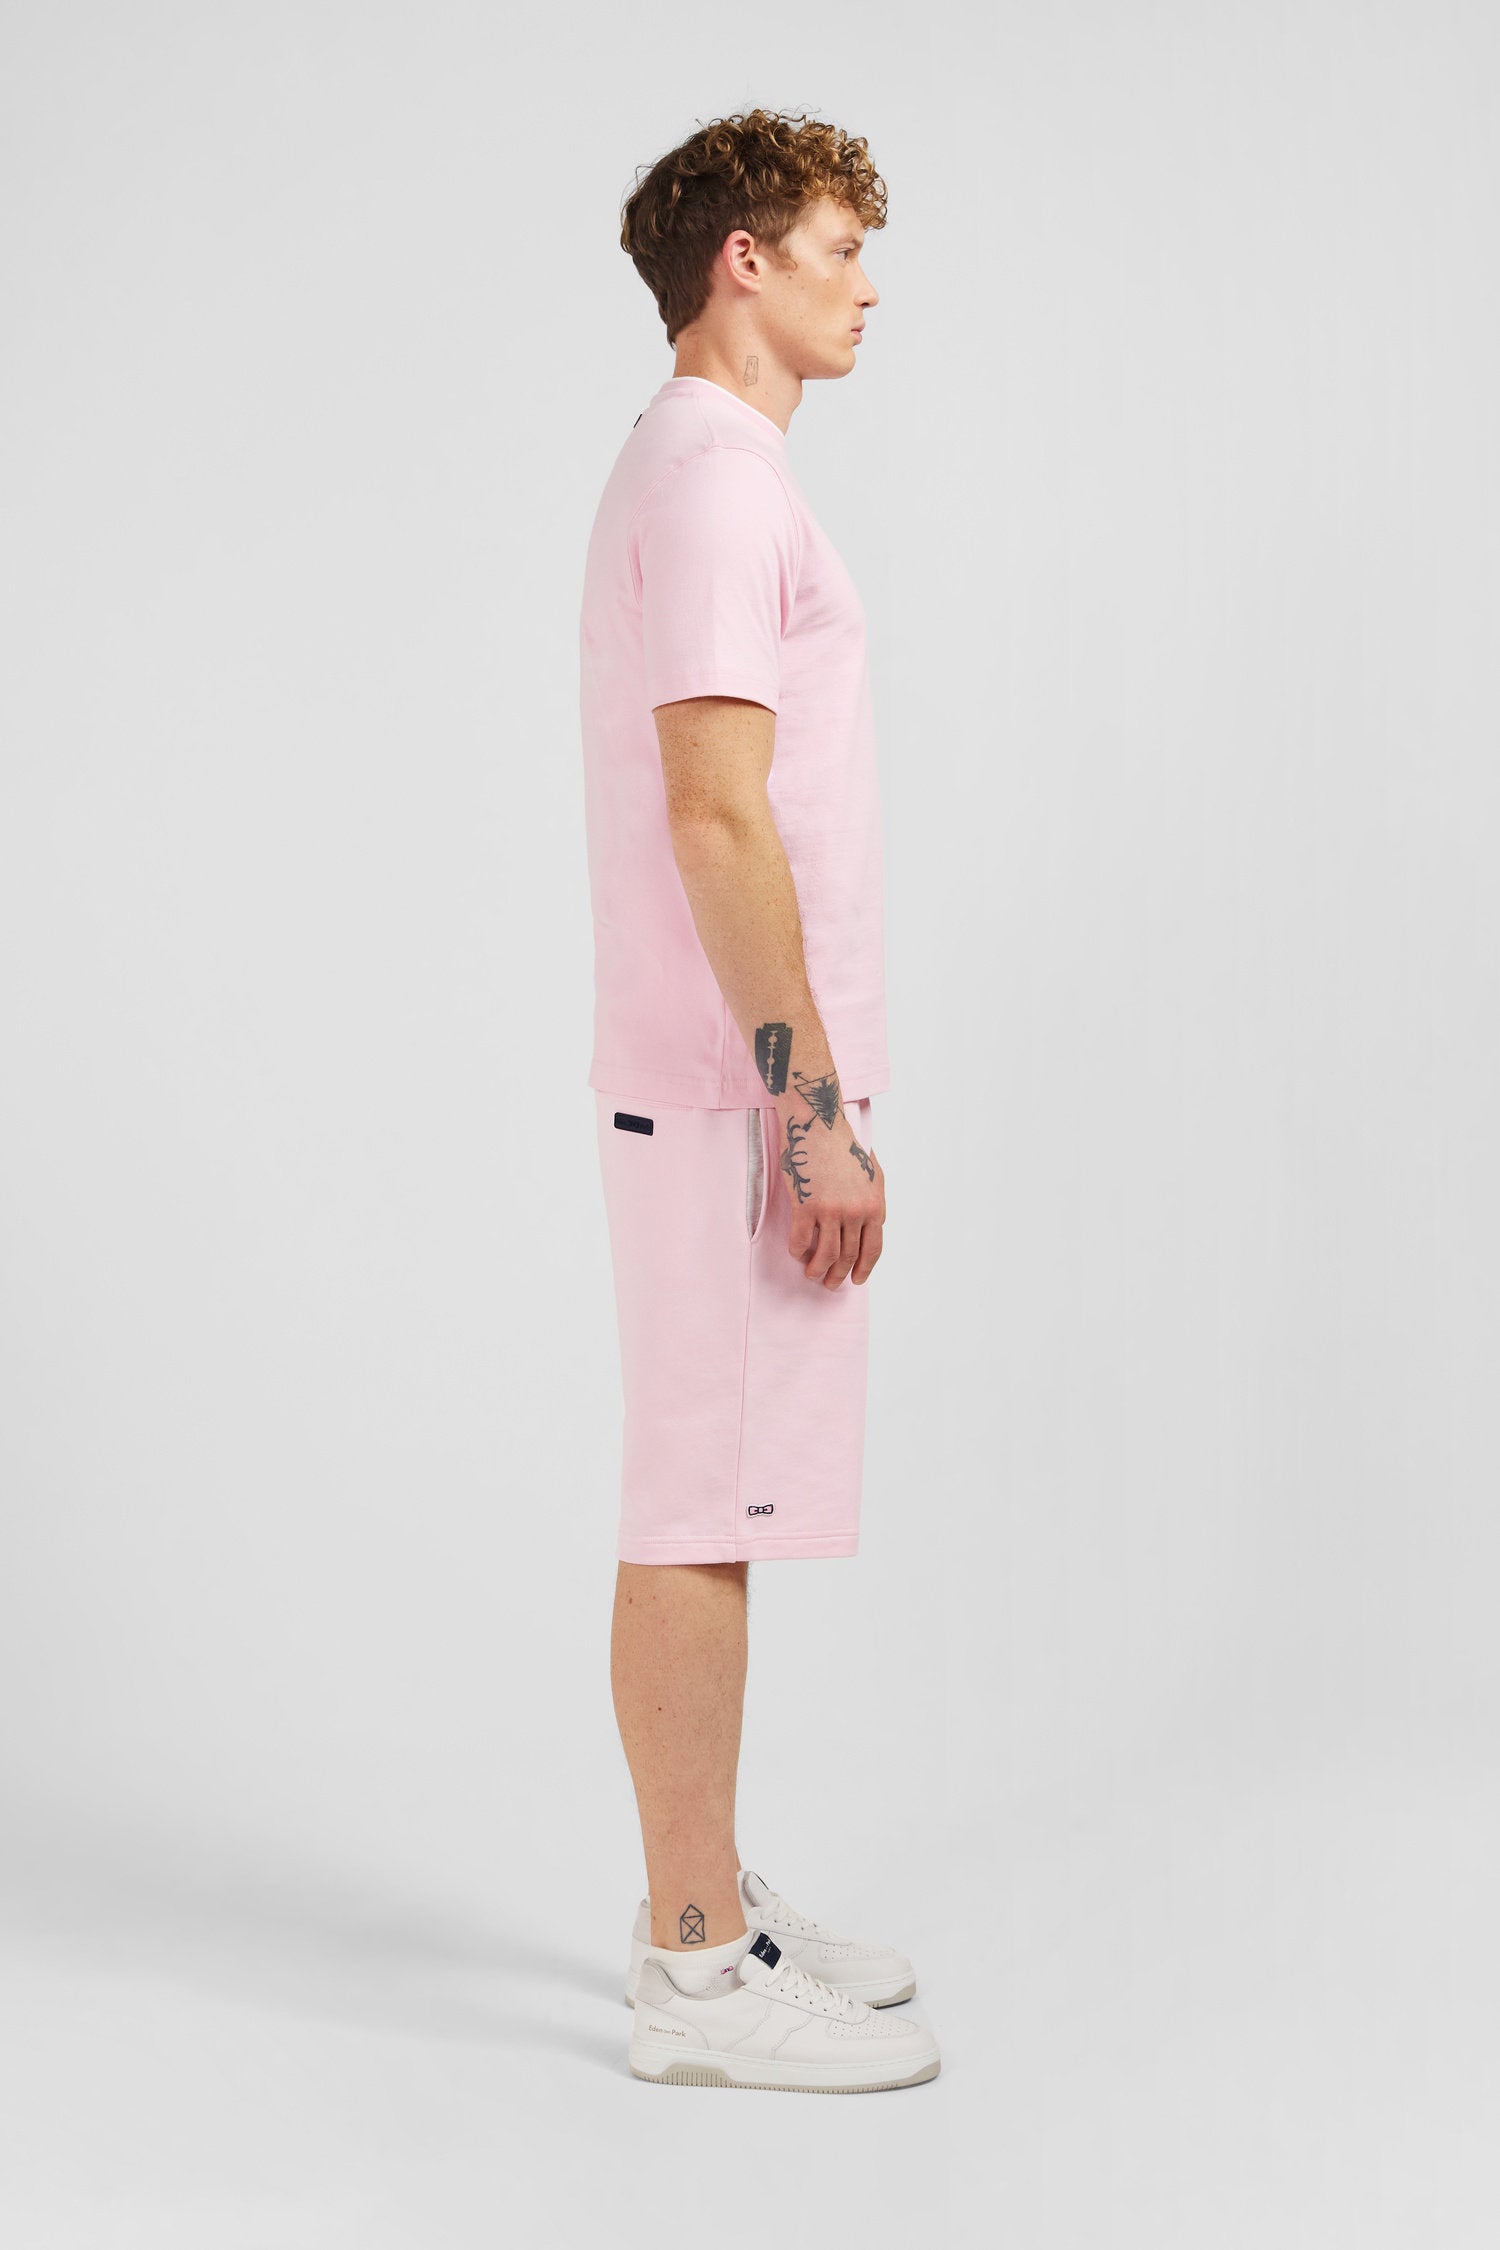 Plain Pink Short-Sleeved T-Shirt_E24MAITC0018_ROC16_09